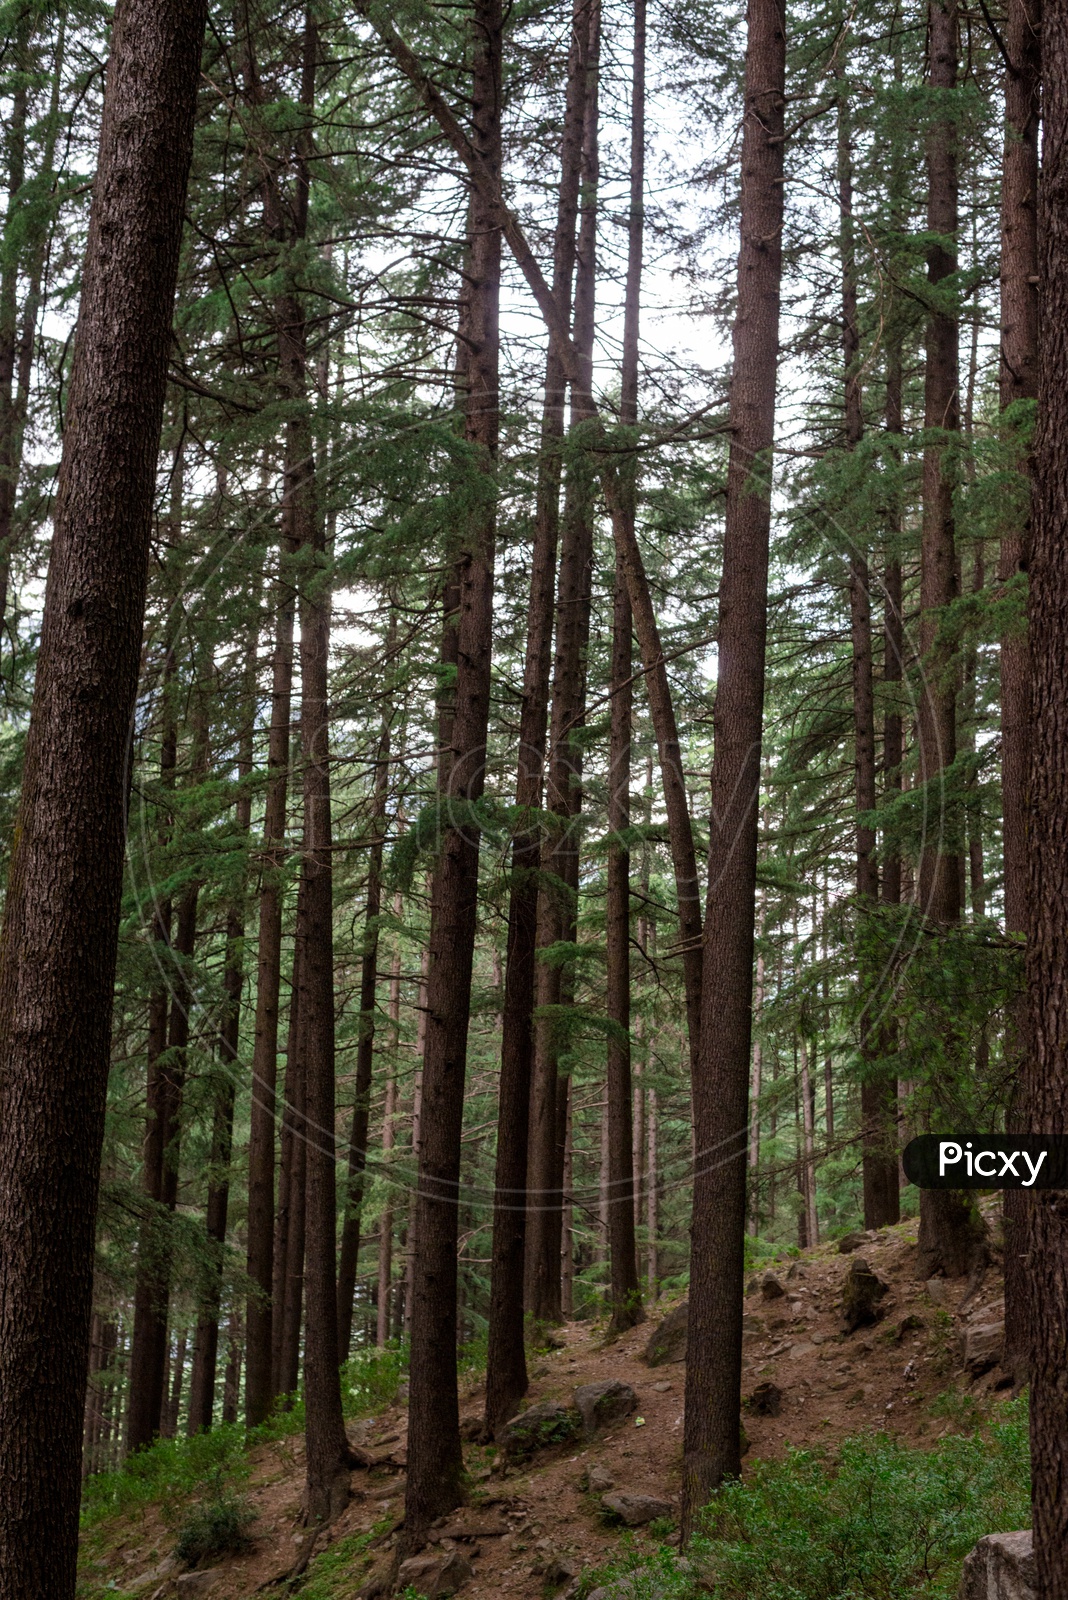 Spruce fir forests in Van Vihar